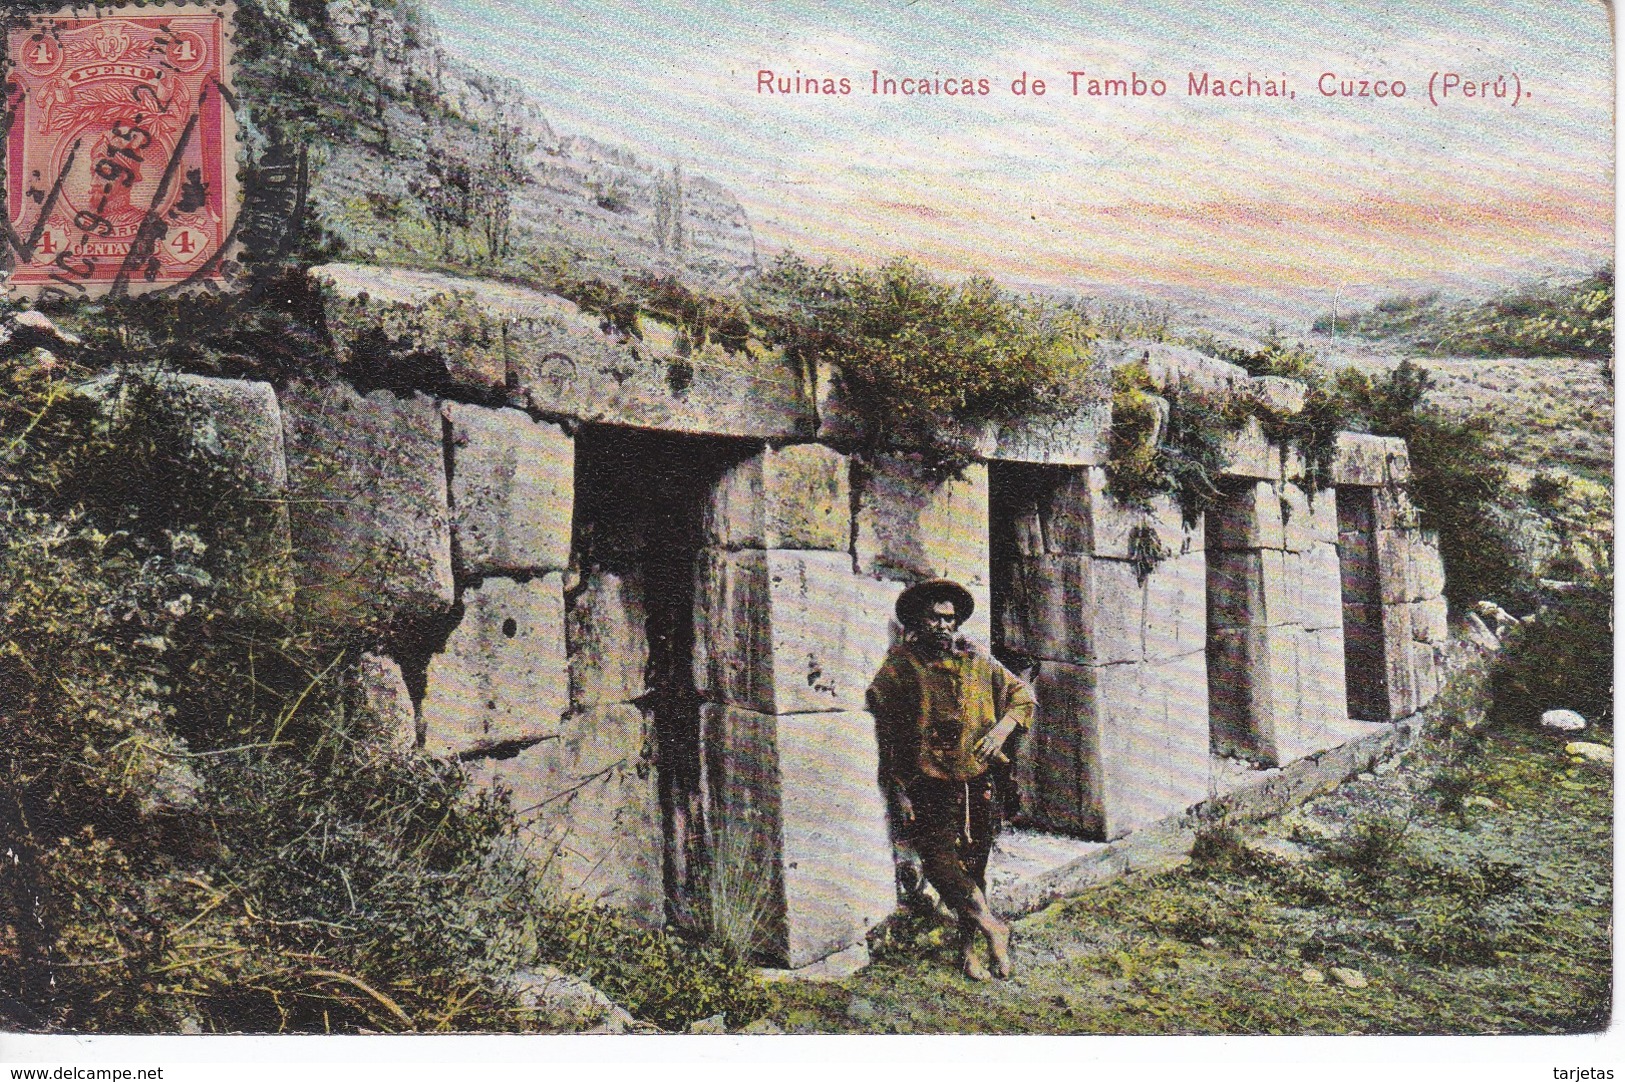 POSTAL DE CUZCO DE LAS RUINAS INCAICAS DE TAMBO MACHAI DEL AÑO 1915 (PERU) (E.POLACH SCHNEIDER) - Perú